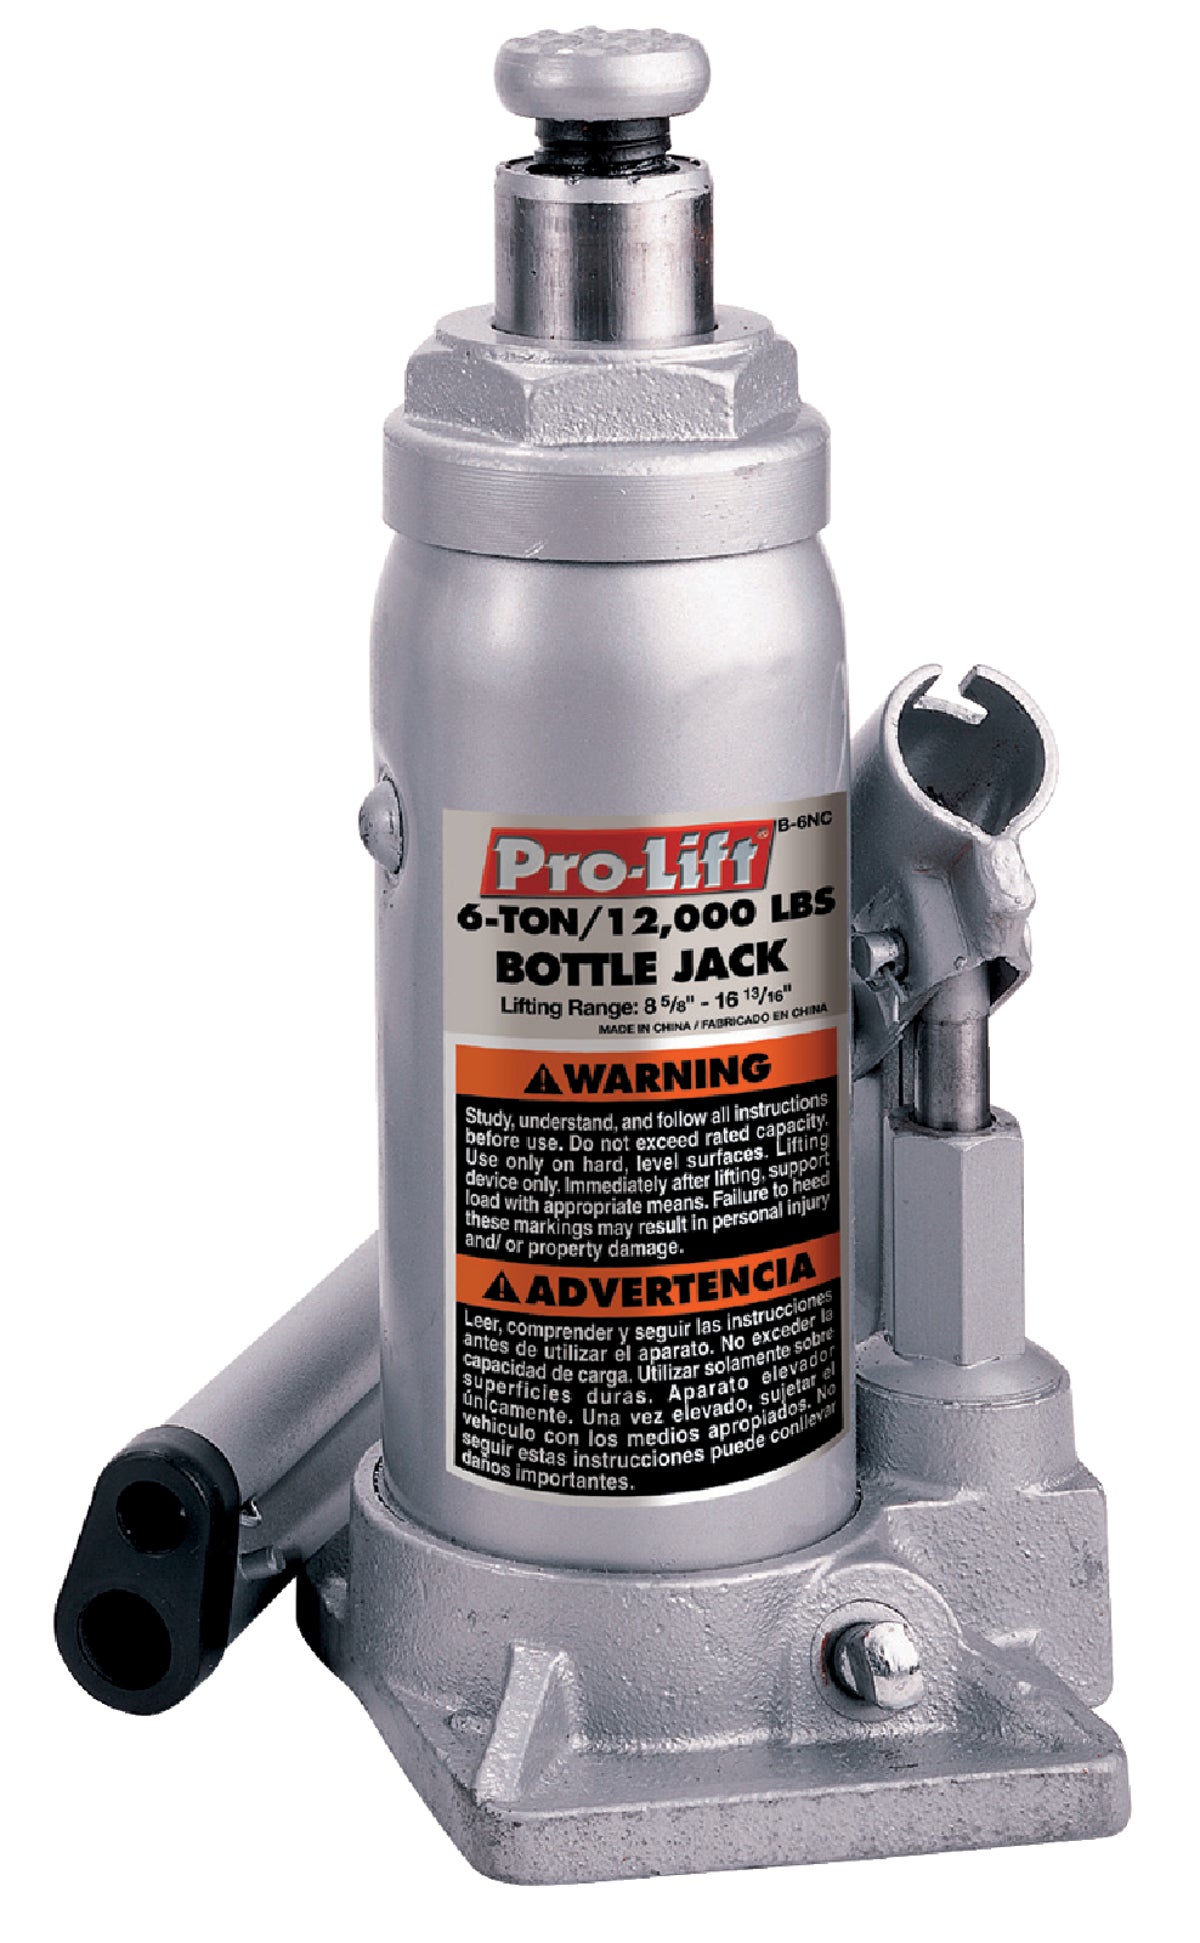 Pro-LifT B0600 Hydraulic Bottle Jack 6 t Capacity